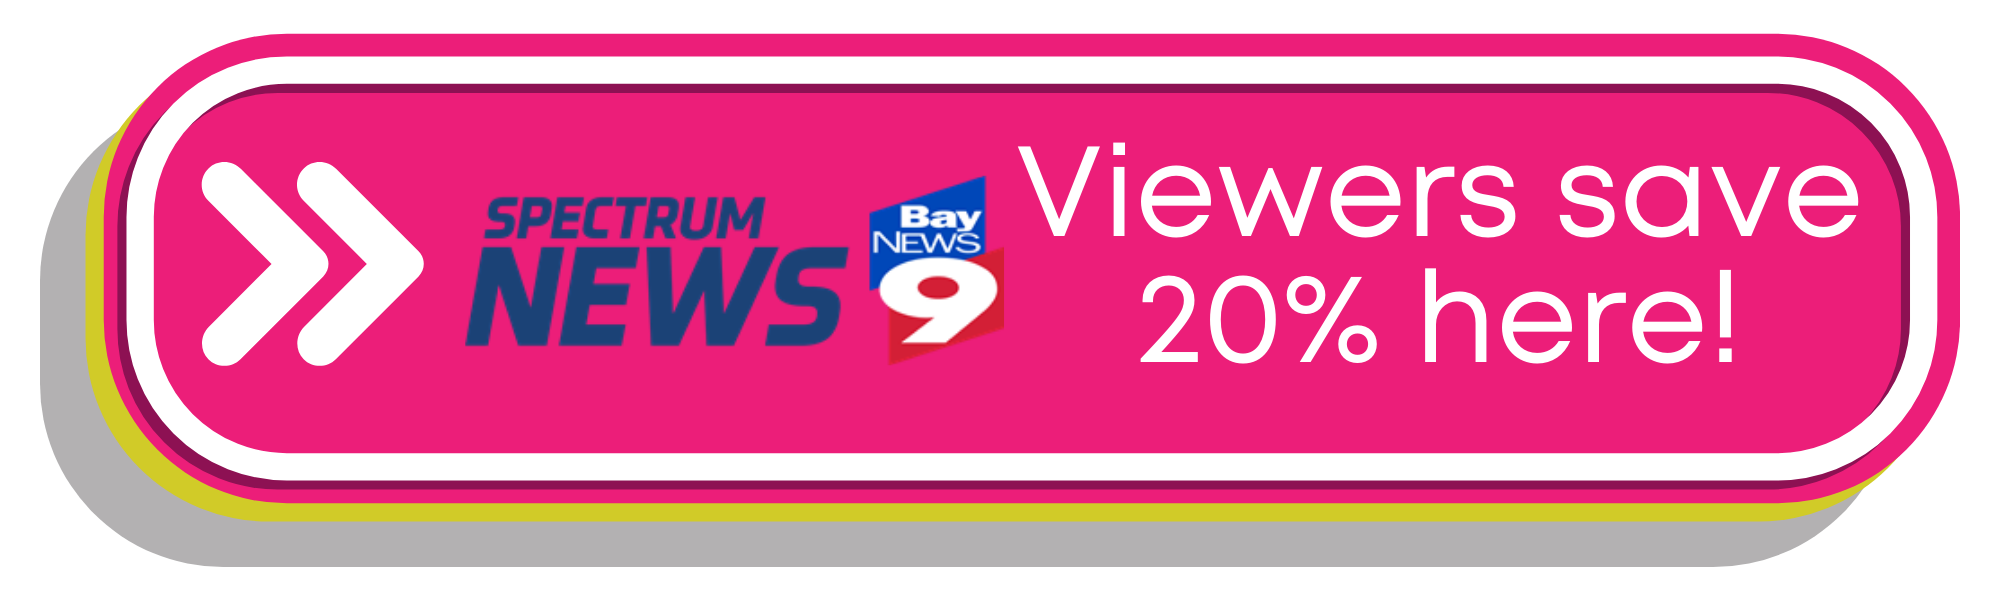 Bay News 9 viewers save 20% here!